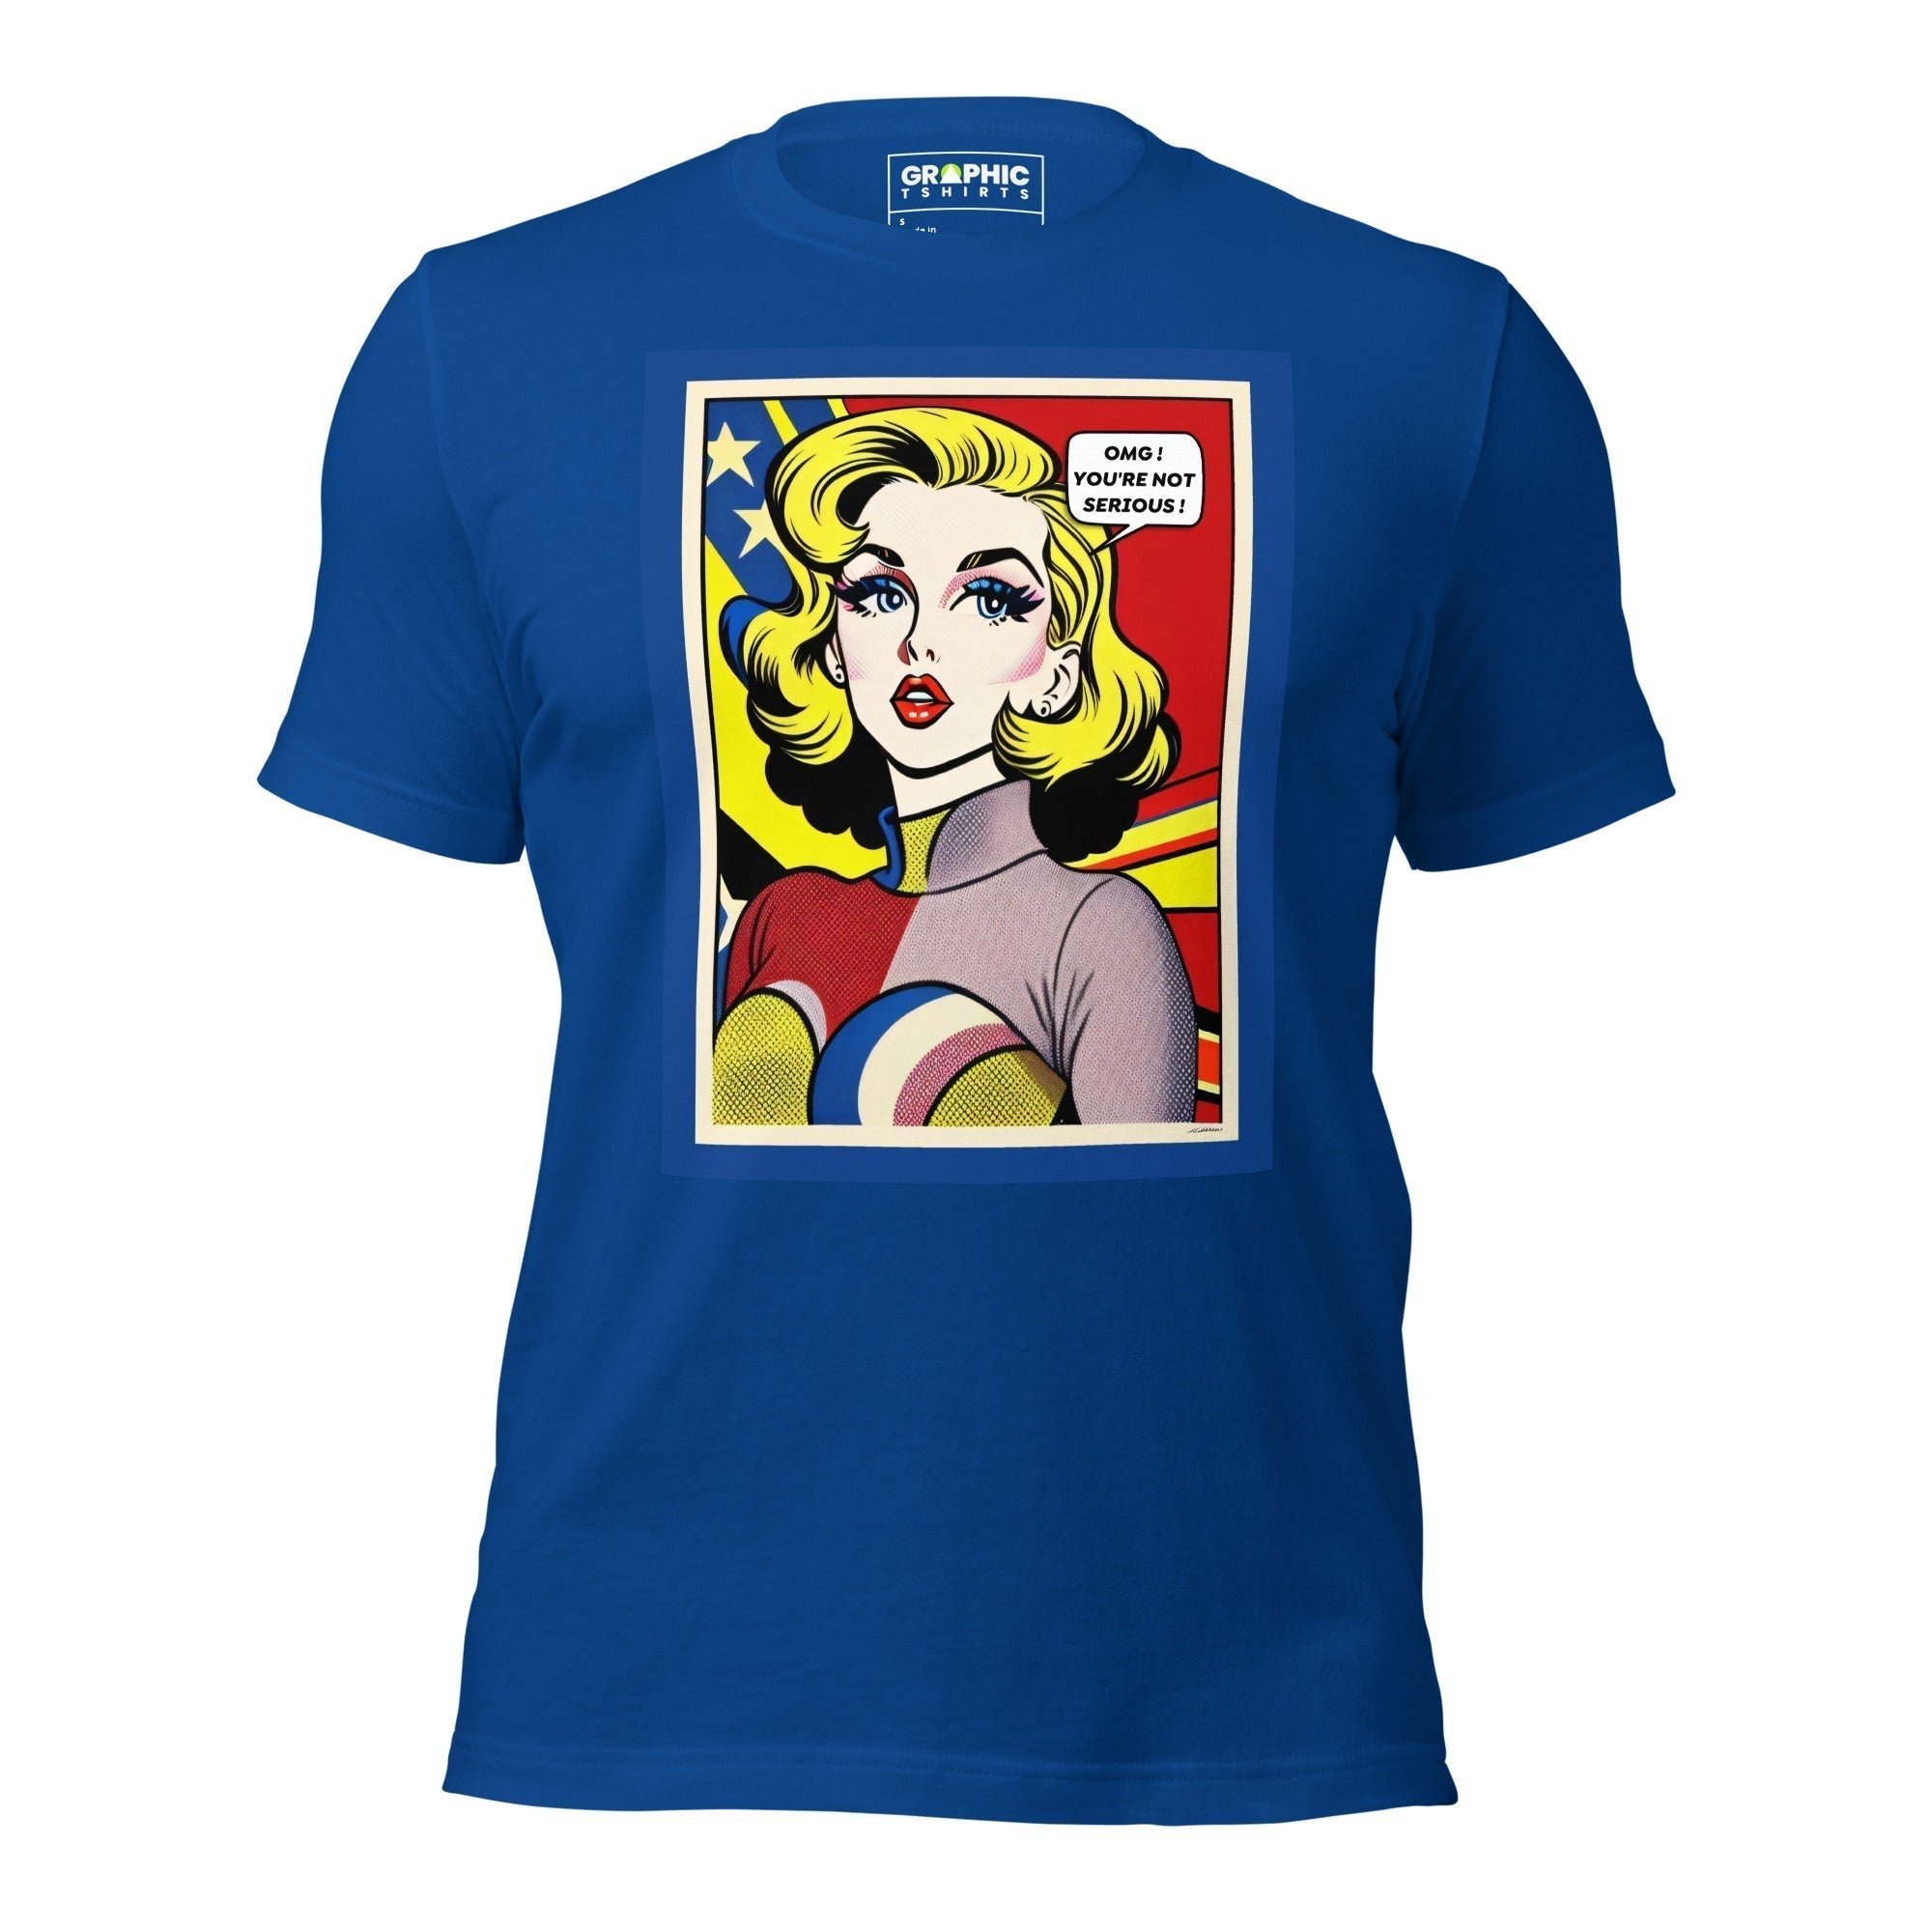 Unisex Crew Neck T-Shirt - Vintage American Comic Series v.39 - GRAPHIC T-SHIRTS